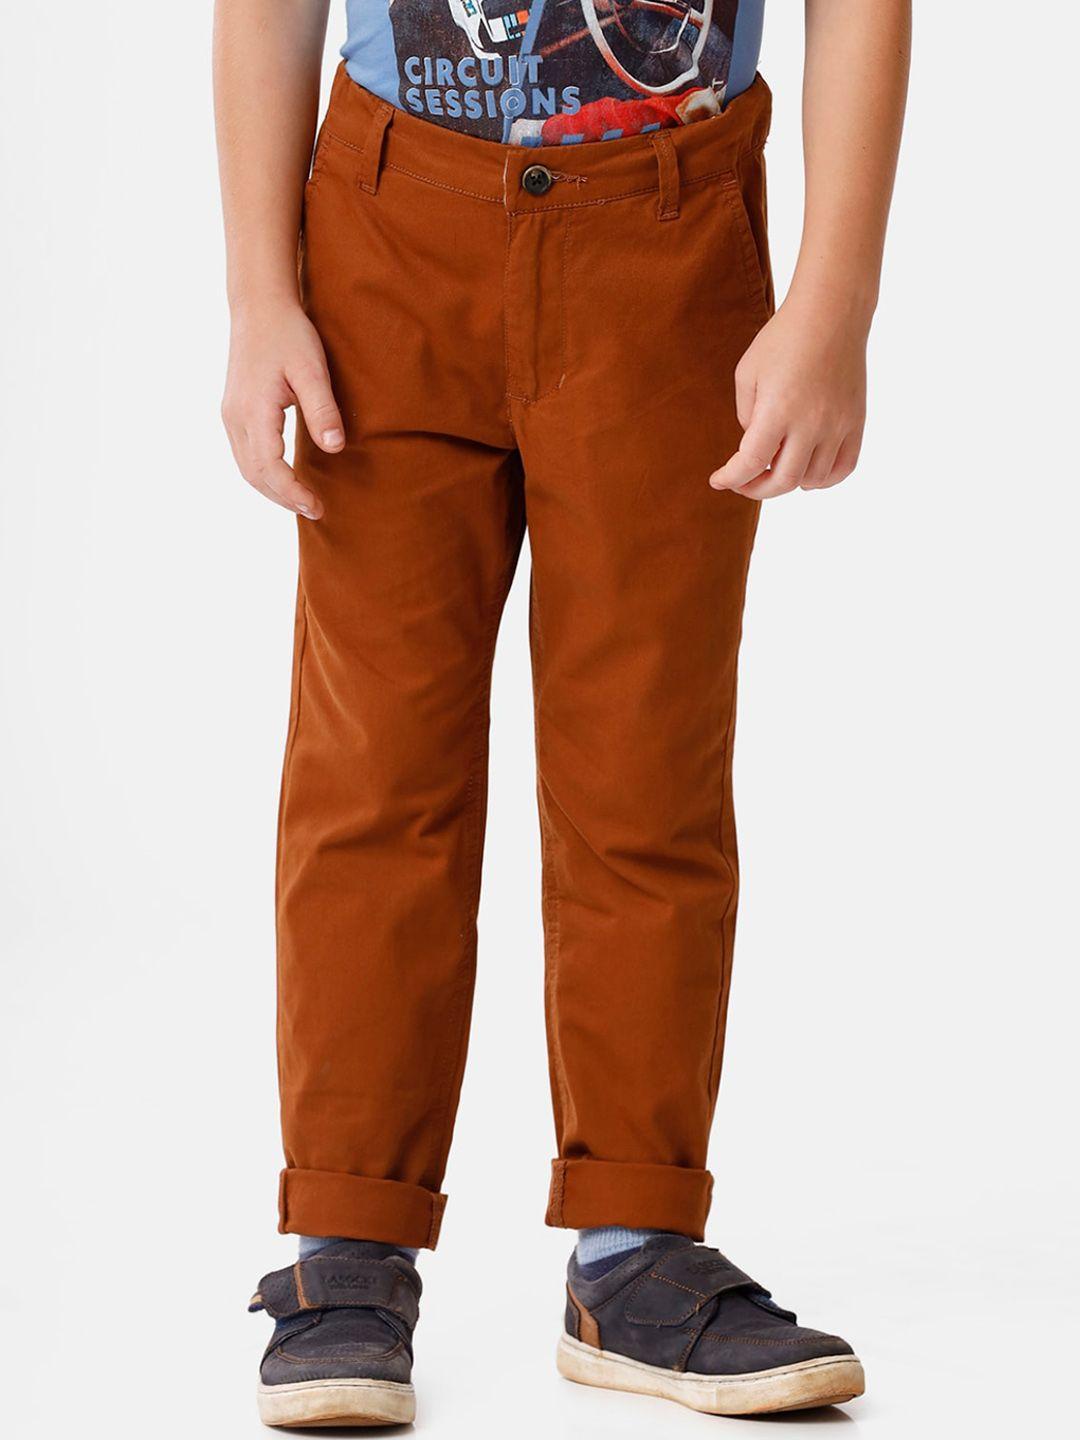 kate & oscar boys rust chinos trousers